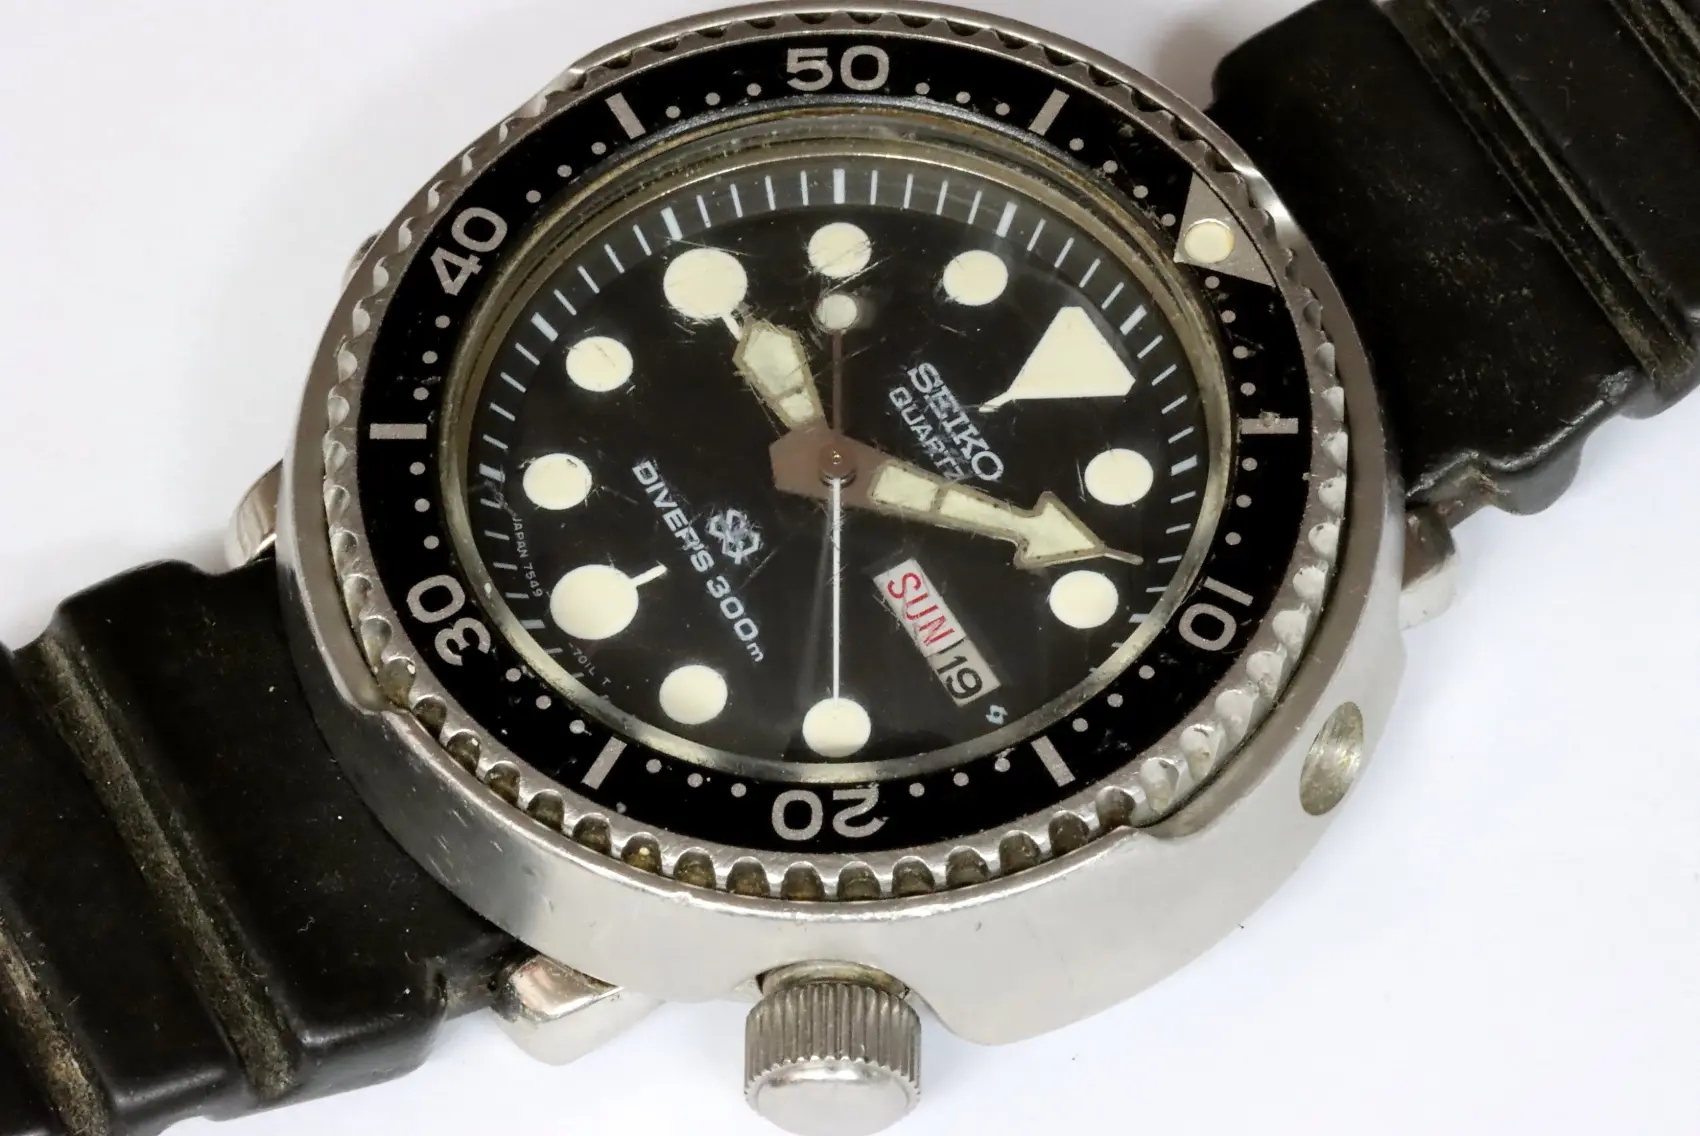 Uncleaned Seiko 7549-7010 original Tuna diver's watch